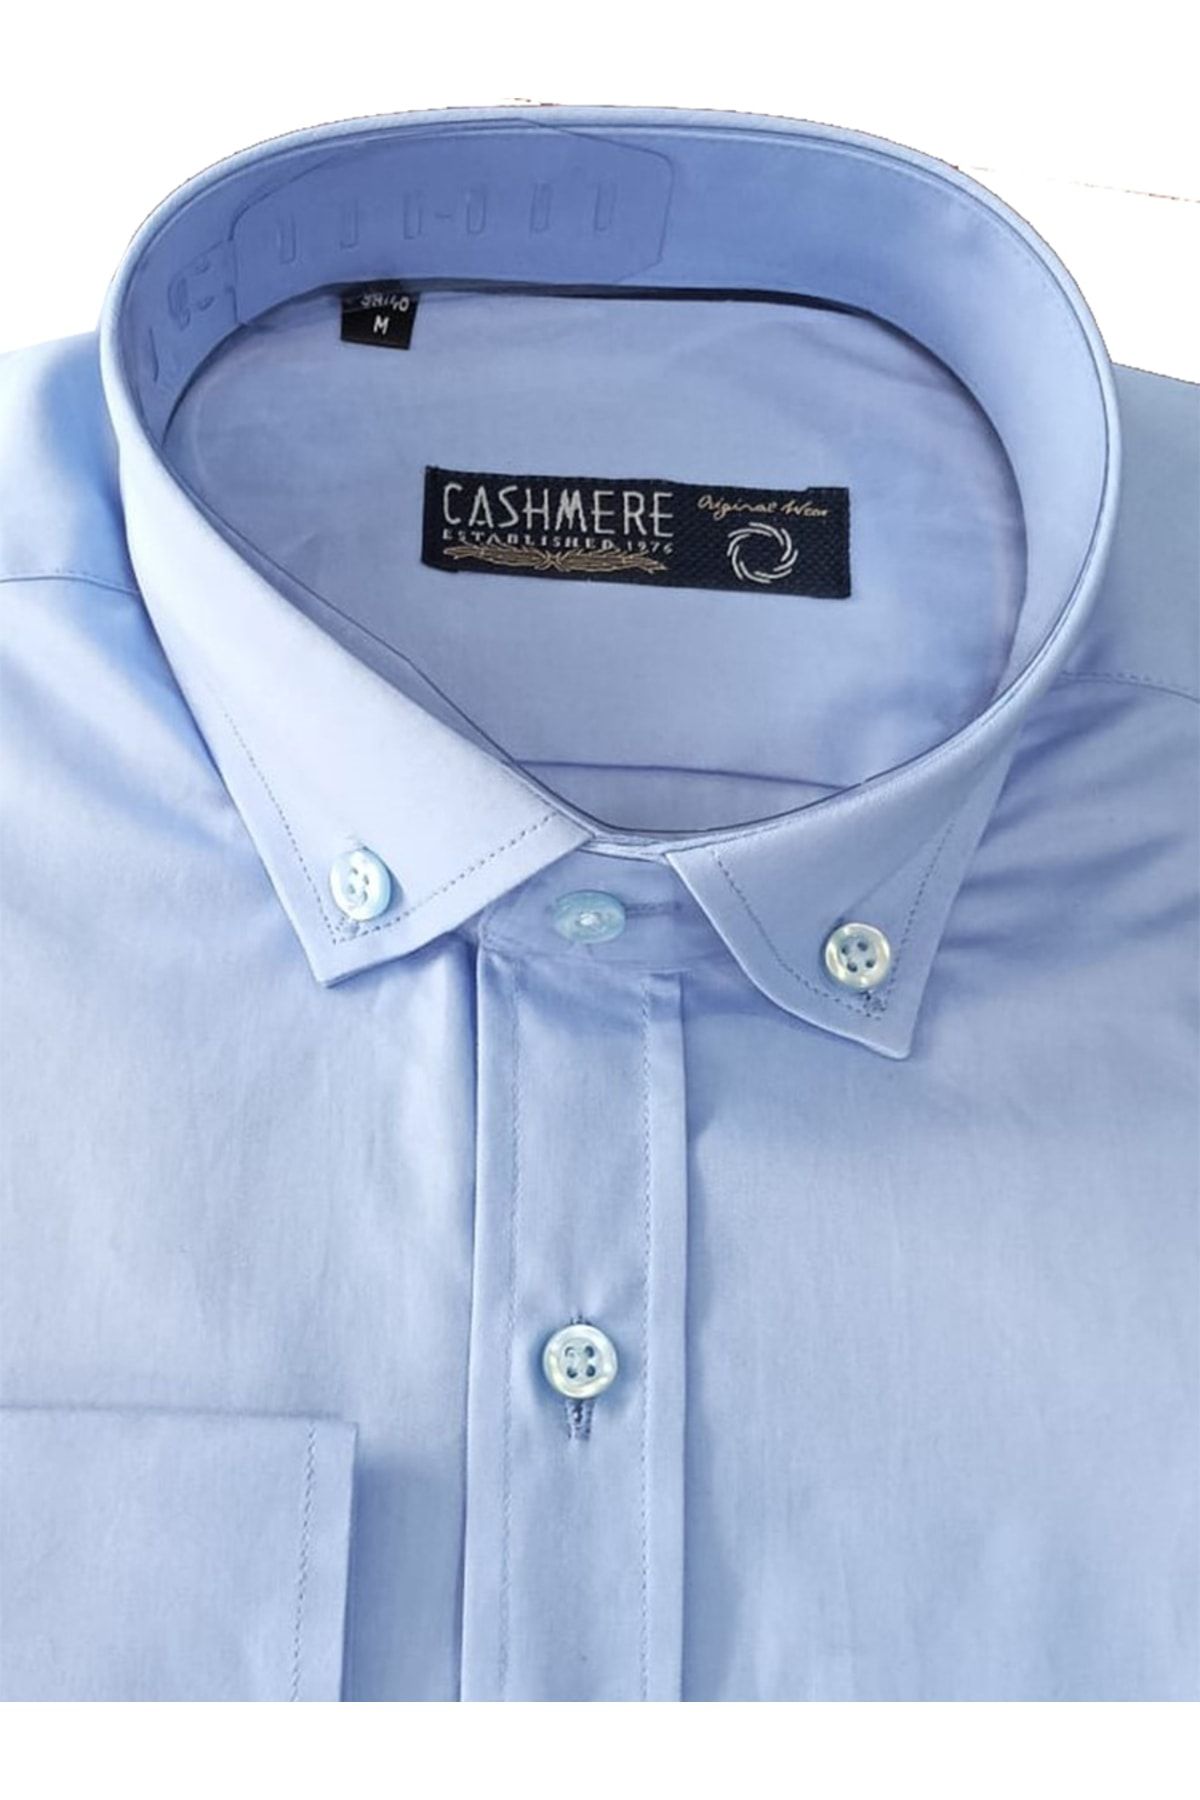 Cashmere Cotton Klasik Erkek Gömlek